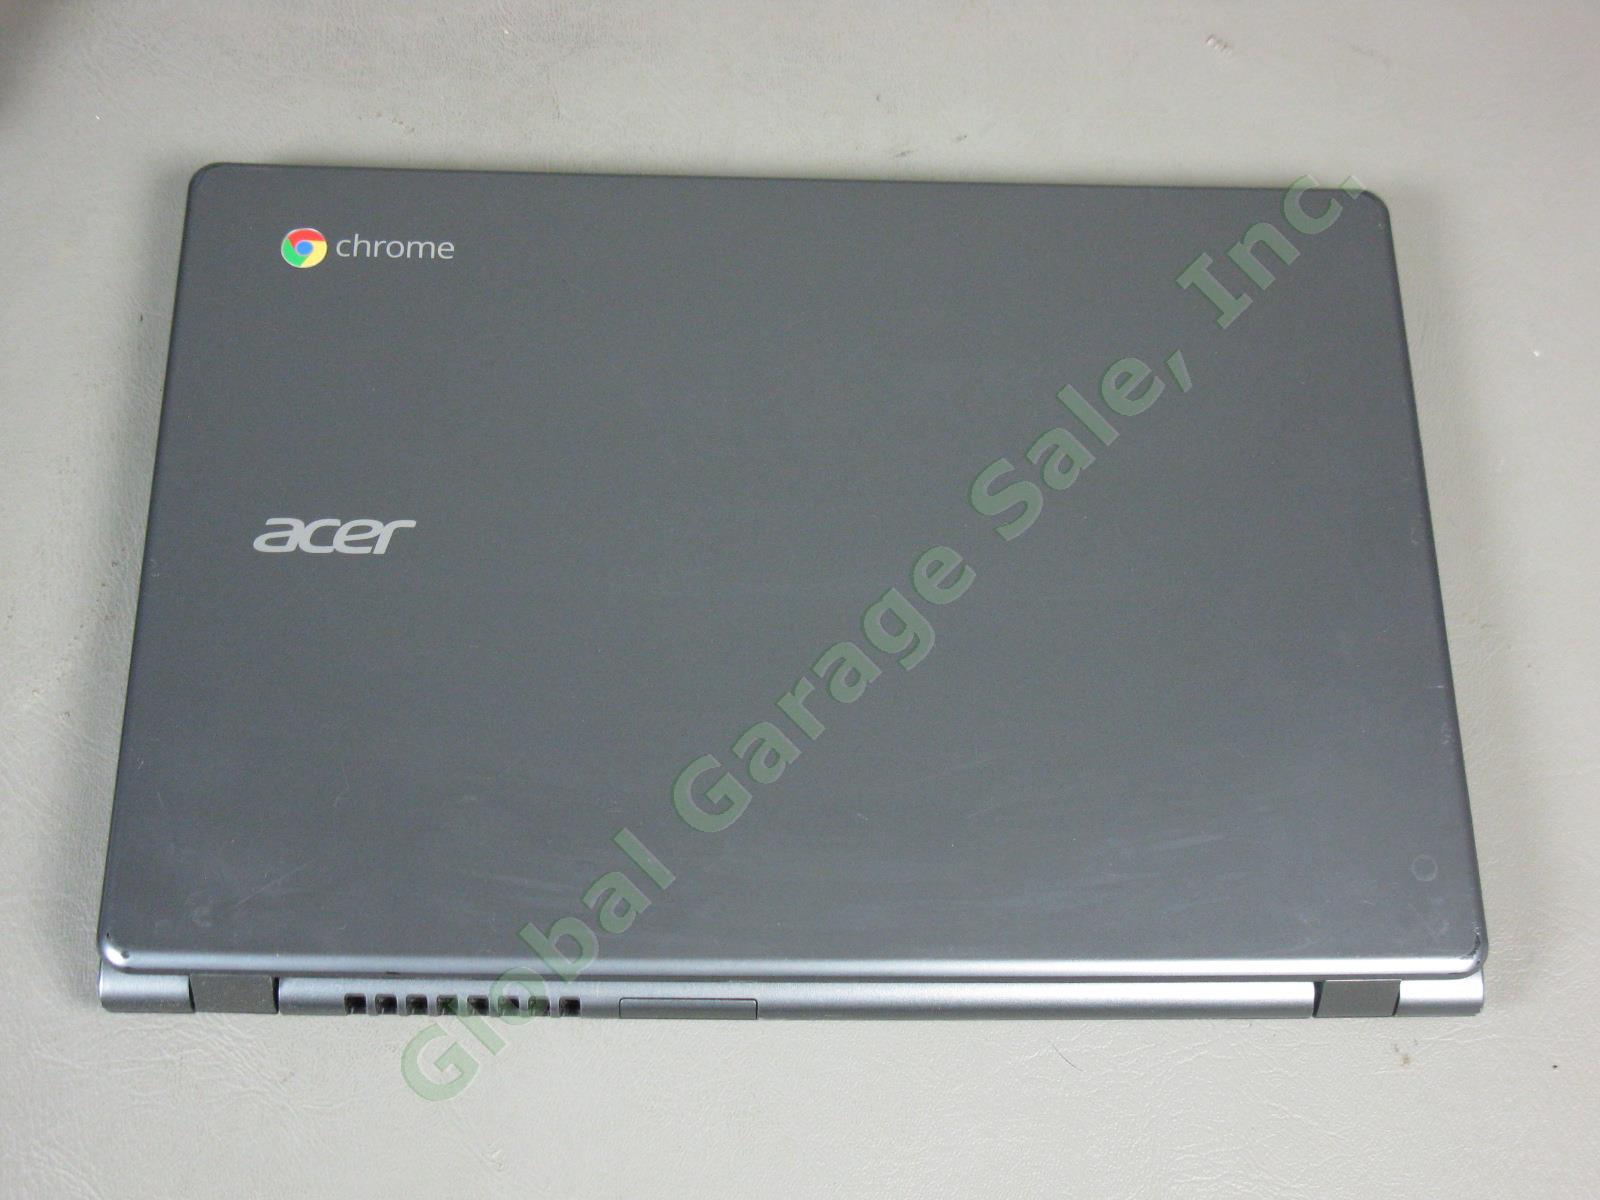 Acer C720P-2625 11.6" Touchscreen Chromebook Laptop 1.40GHz 4GB RAM 16GB SSD 2